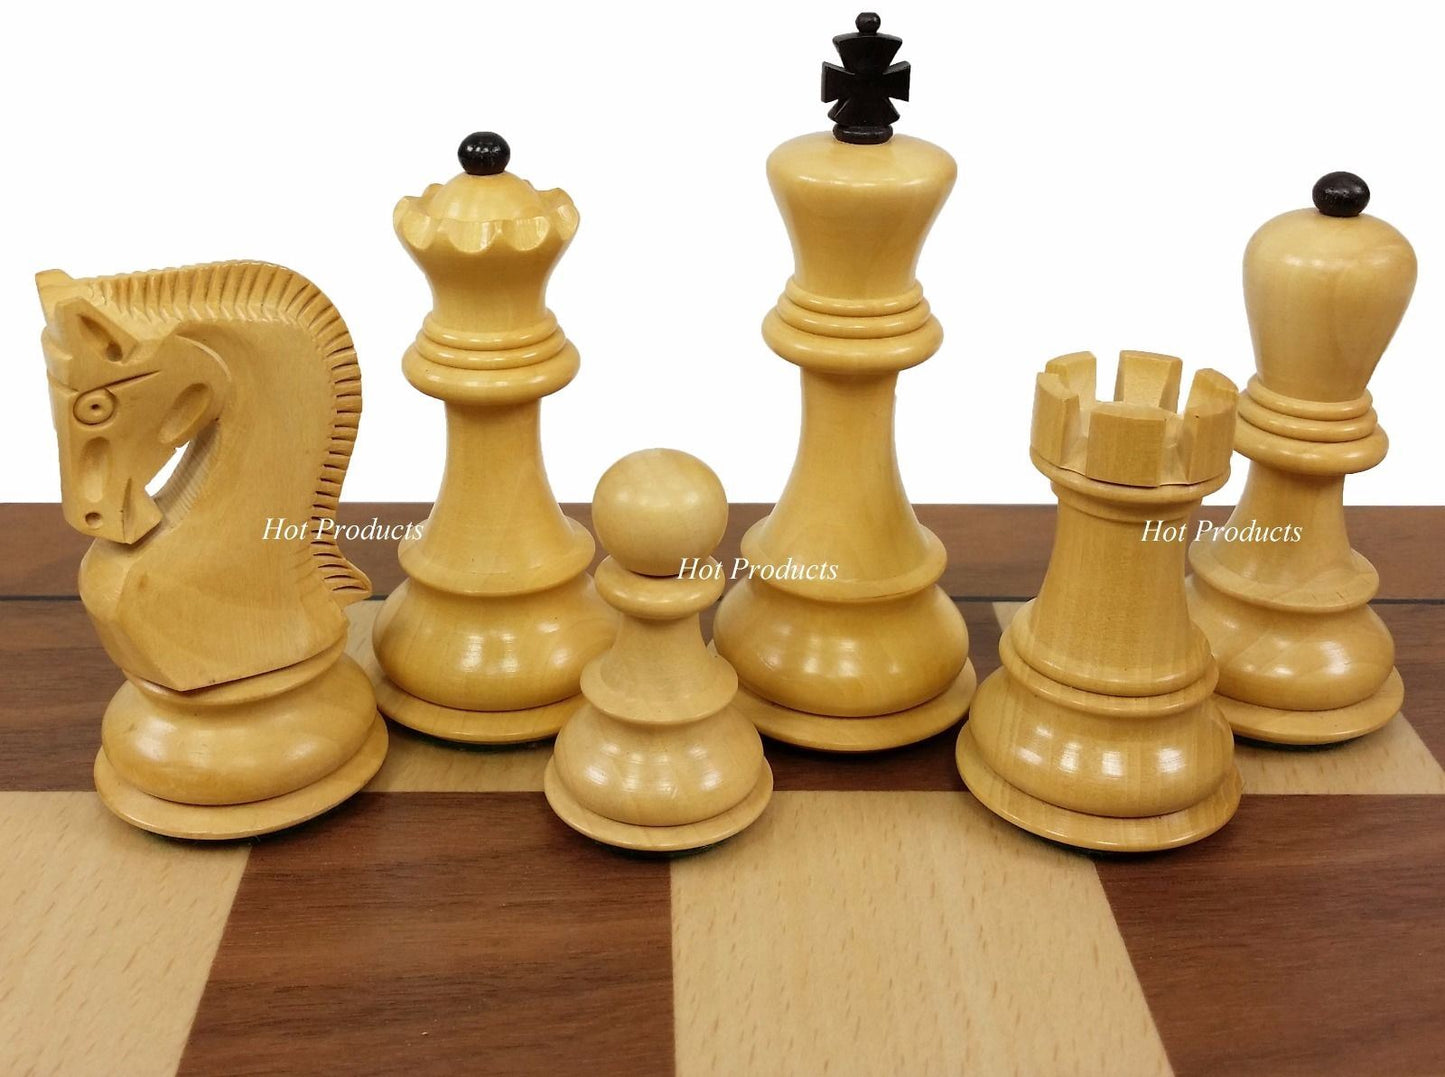 4 QN BLACK RUSSIAN Opp Tops 3 3/4" King Staunton Wood Chess Set Walnut Bd 19"